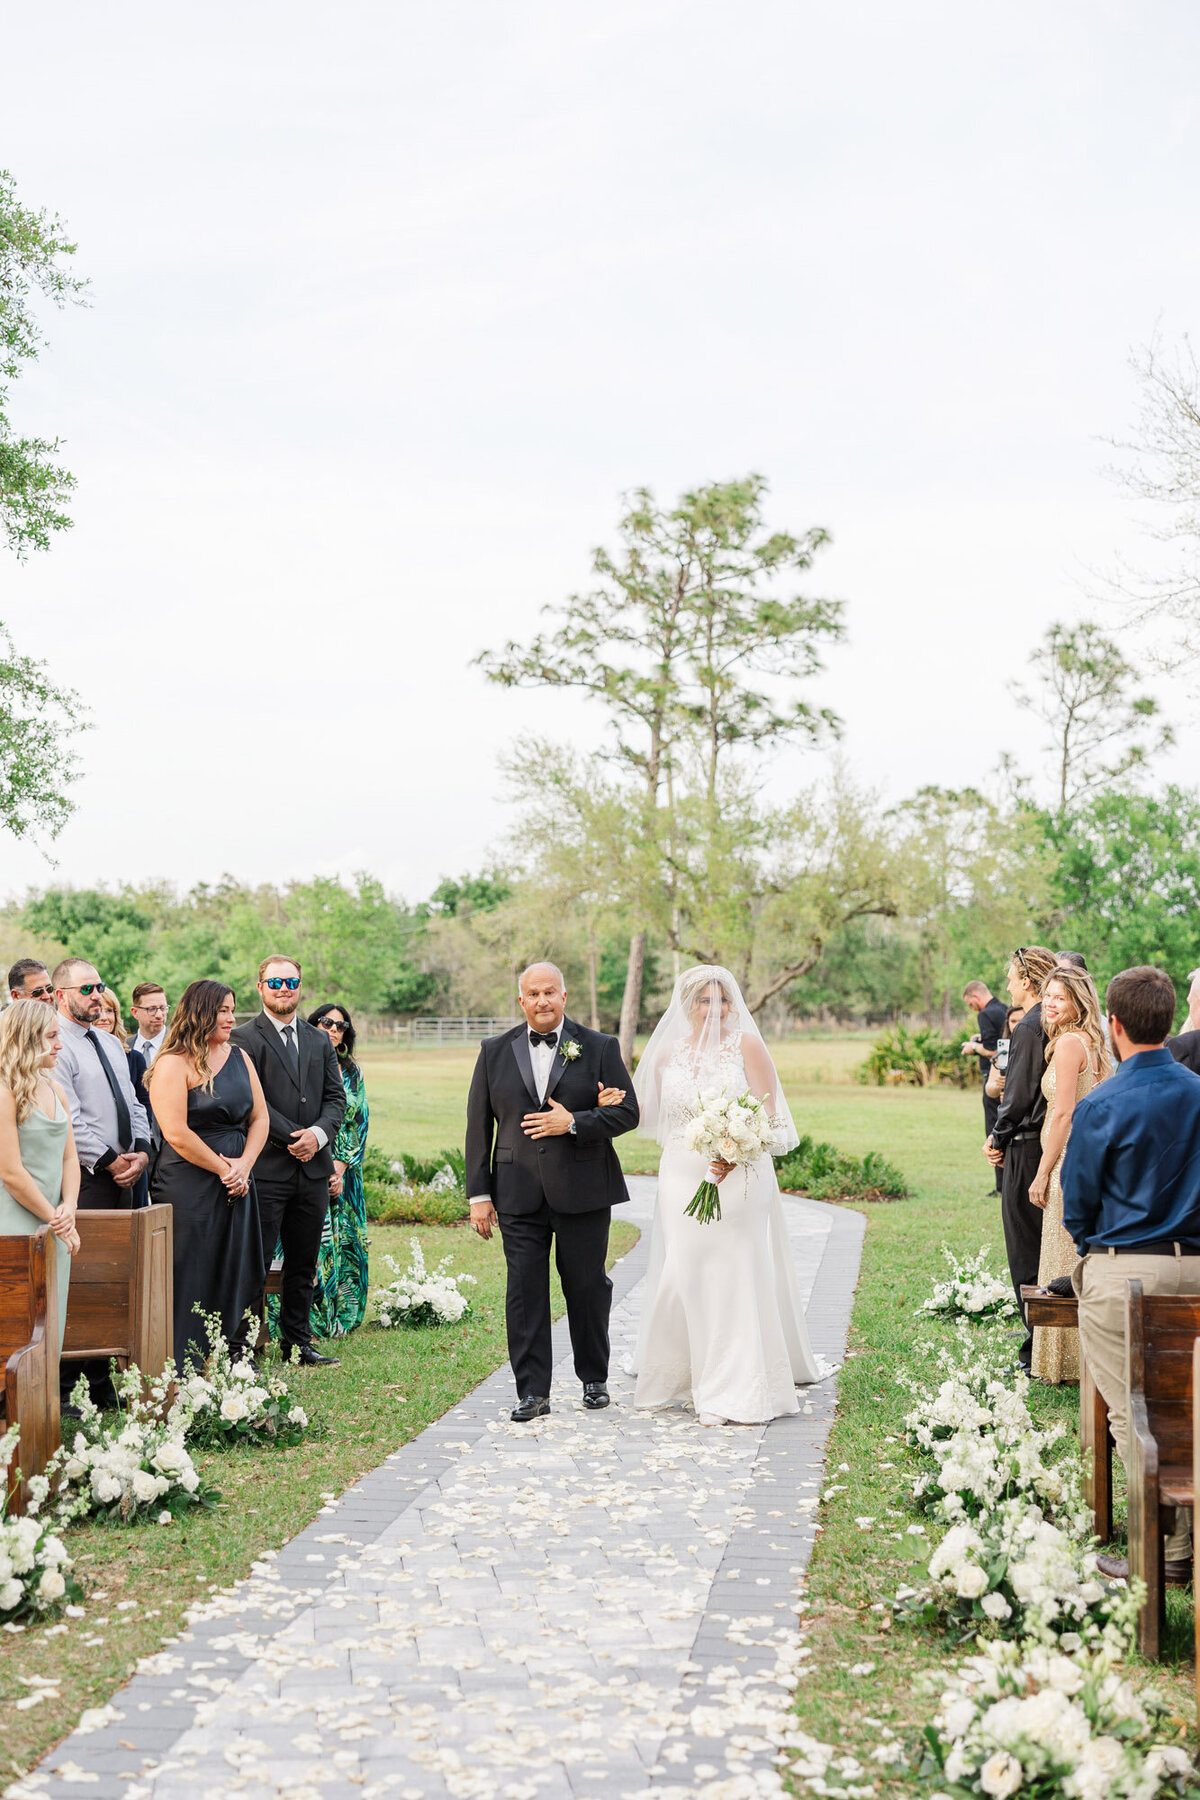 Chloe & Emerson - South Florida Wedding - Deanna Grace Photography -20